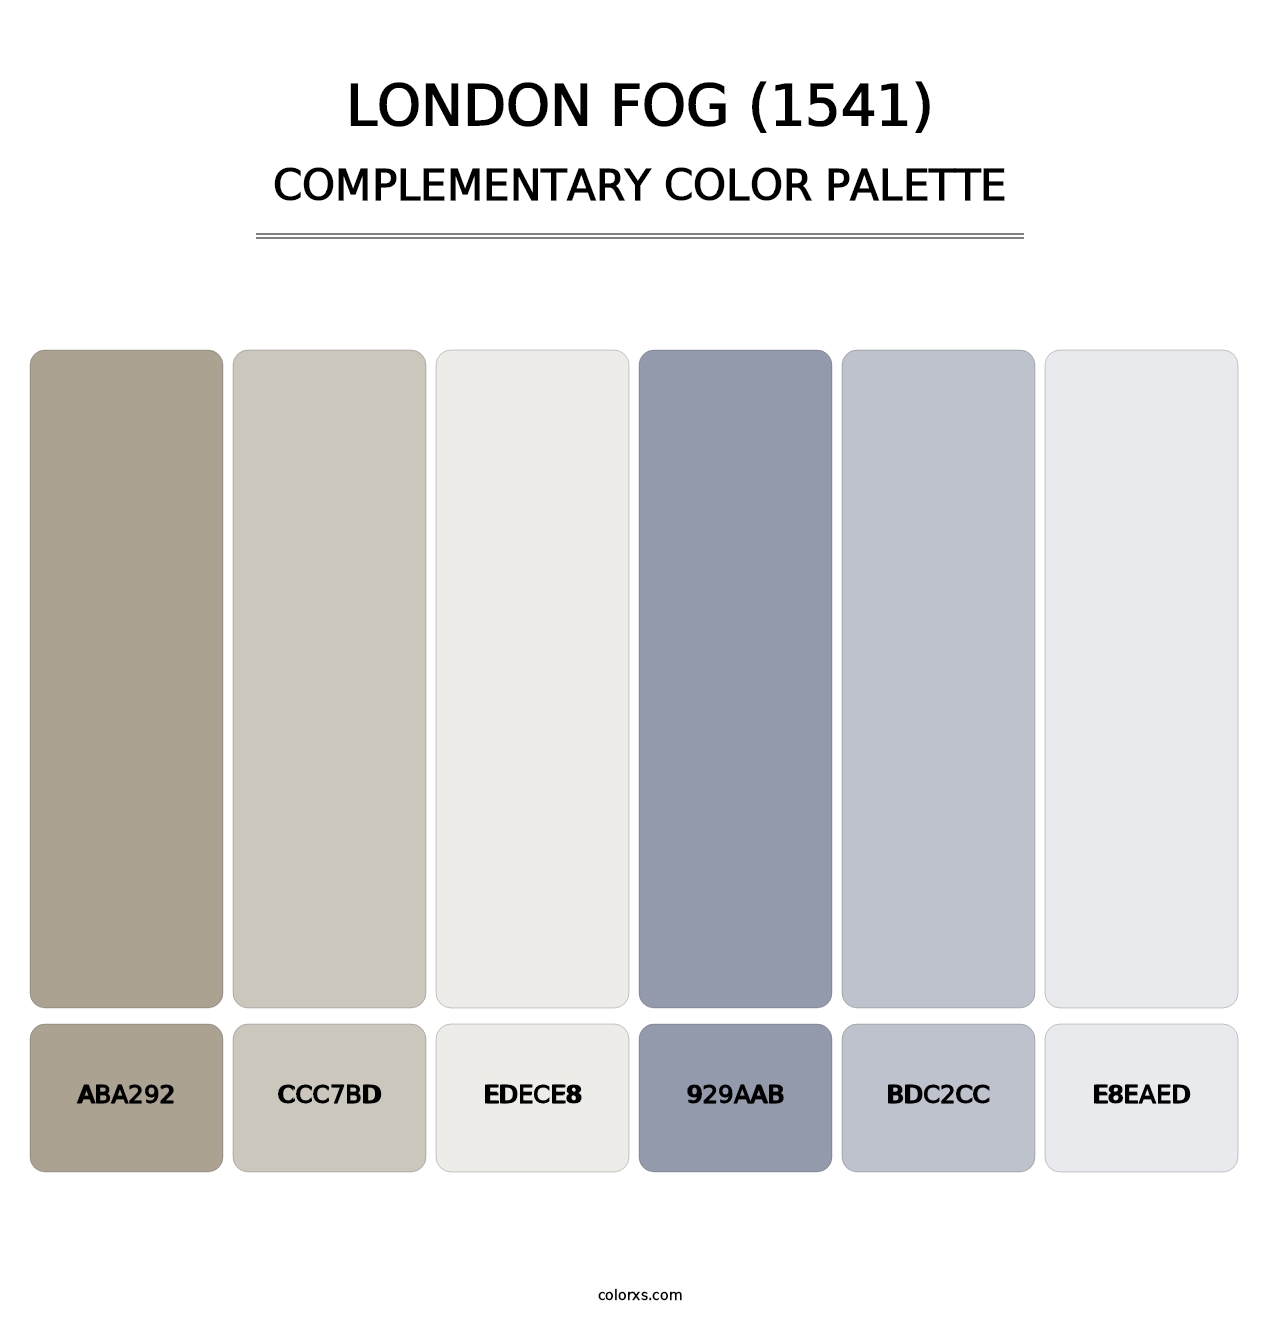 London Fog (1541) - Complementary Color Palette